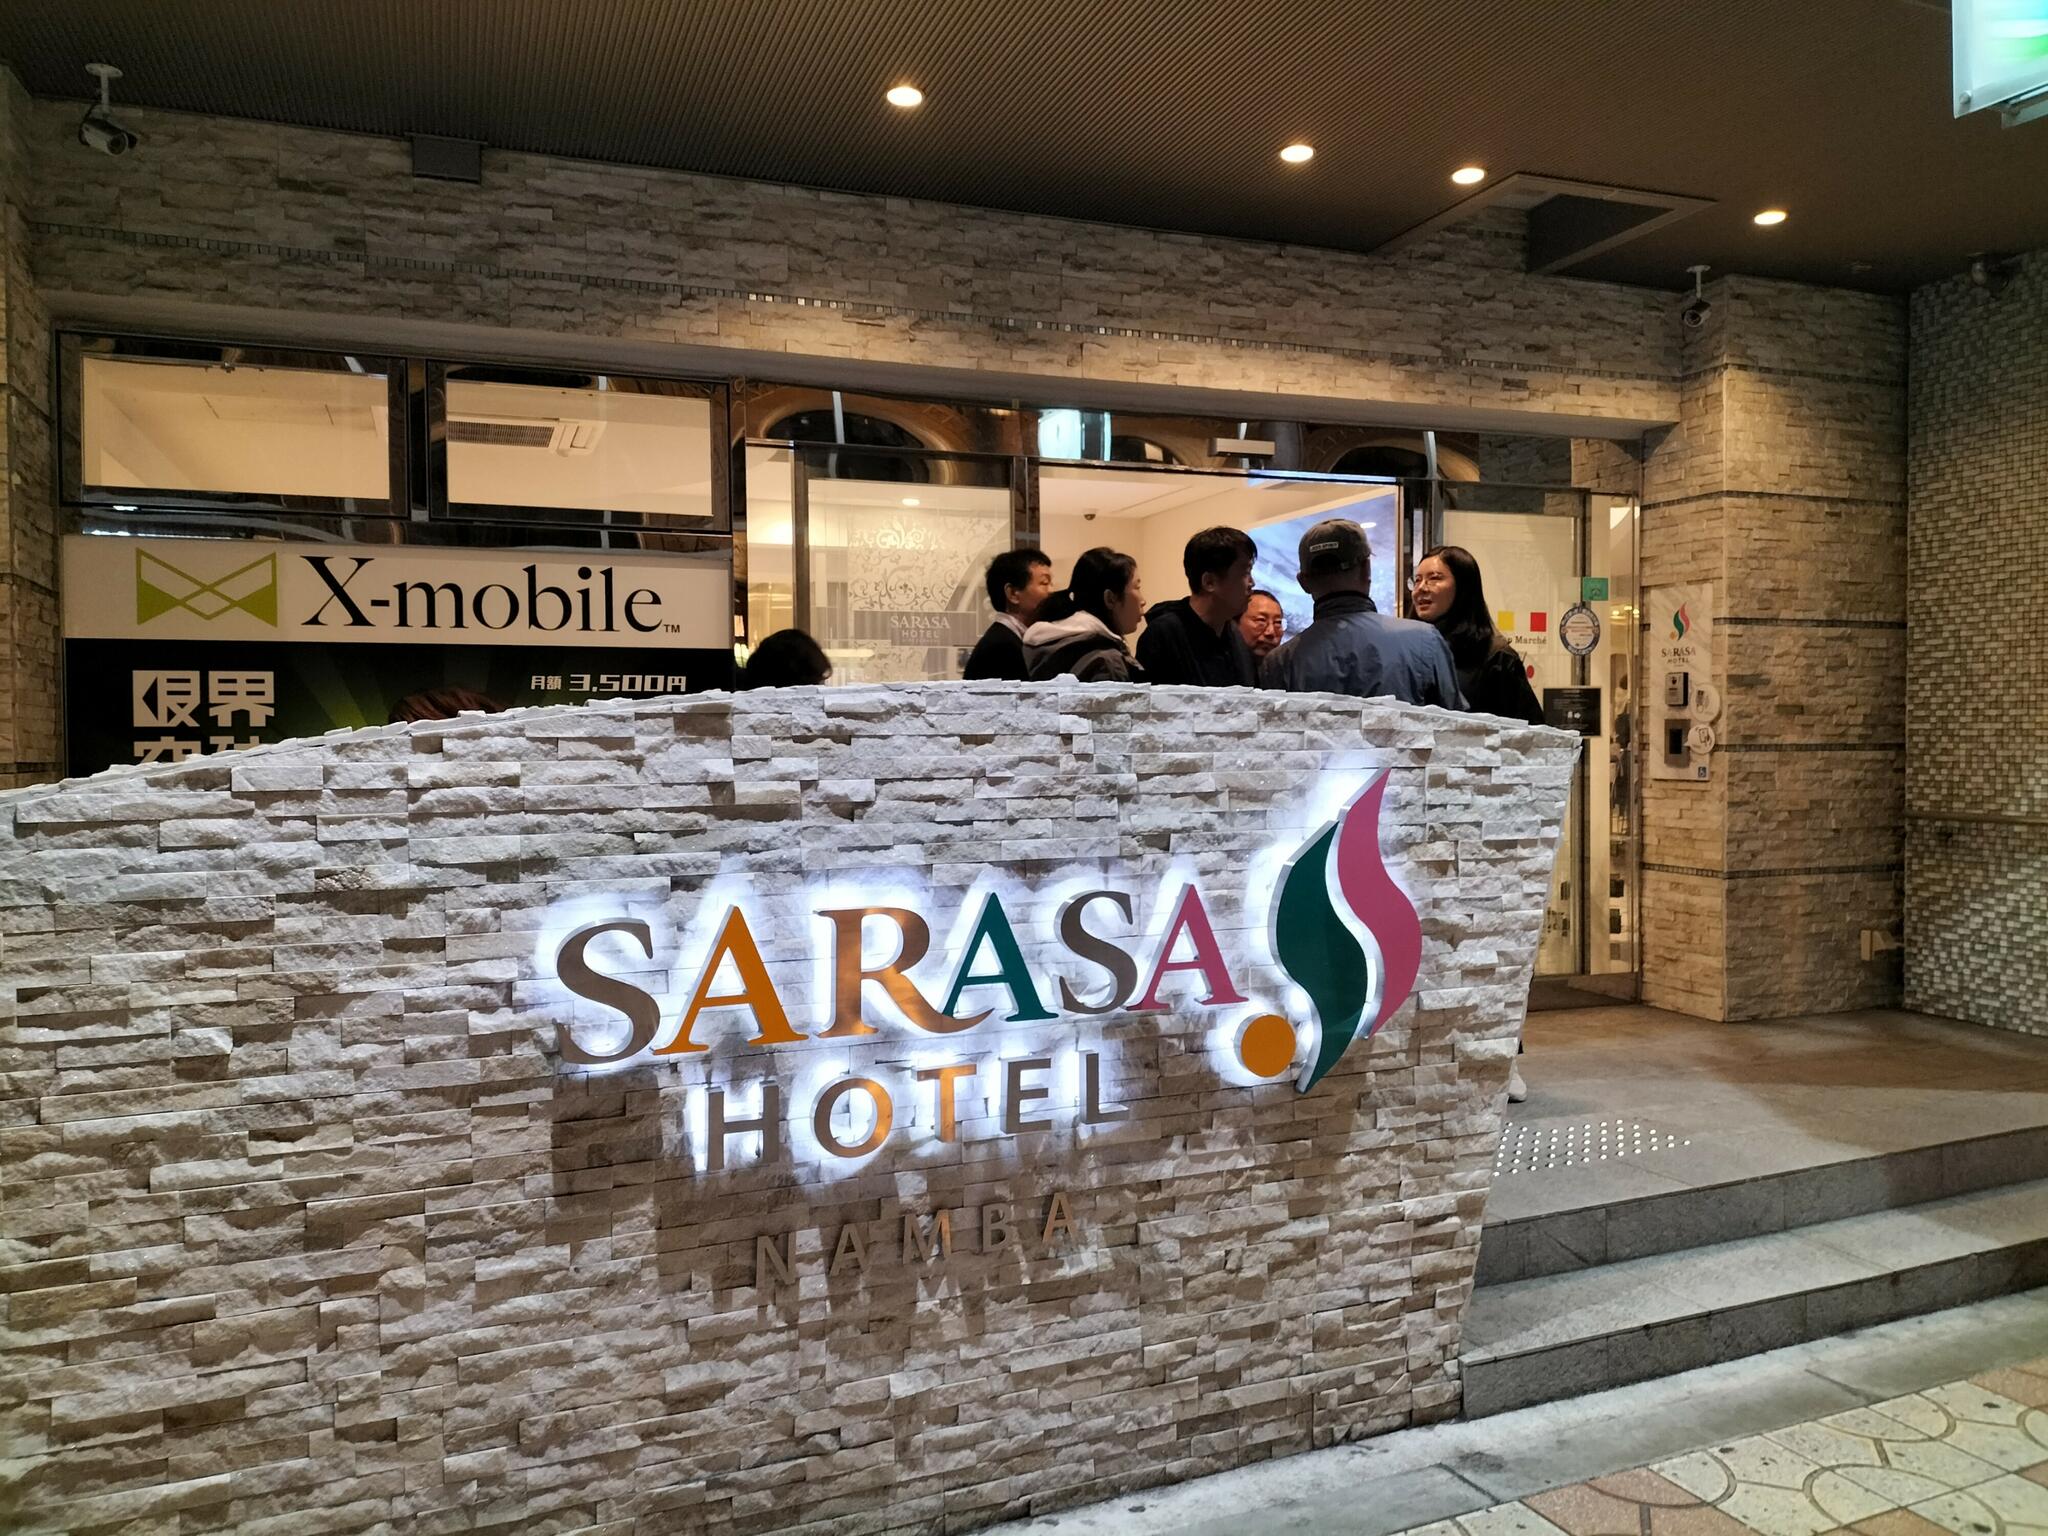 SARASA HOTEL なんばの代表写真4